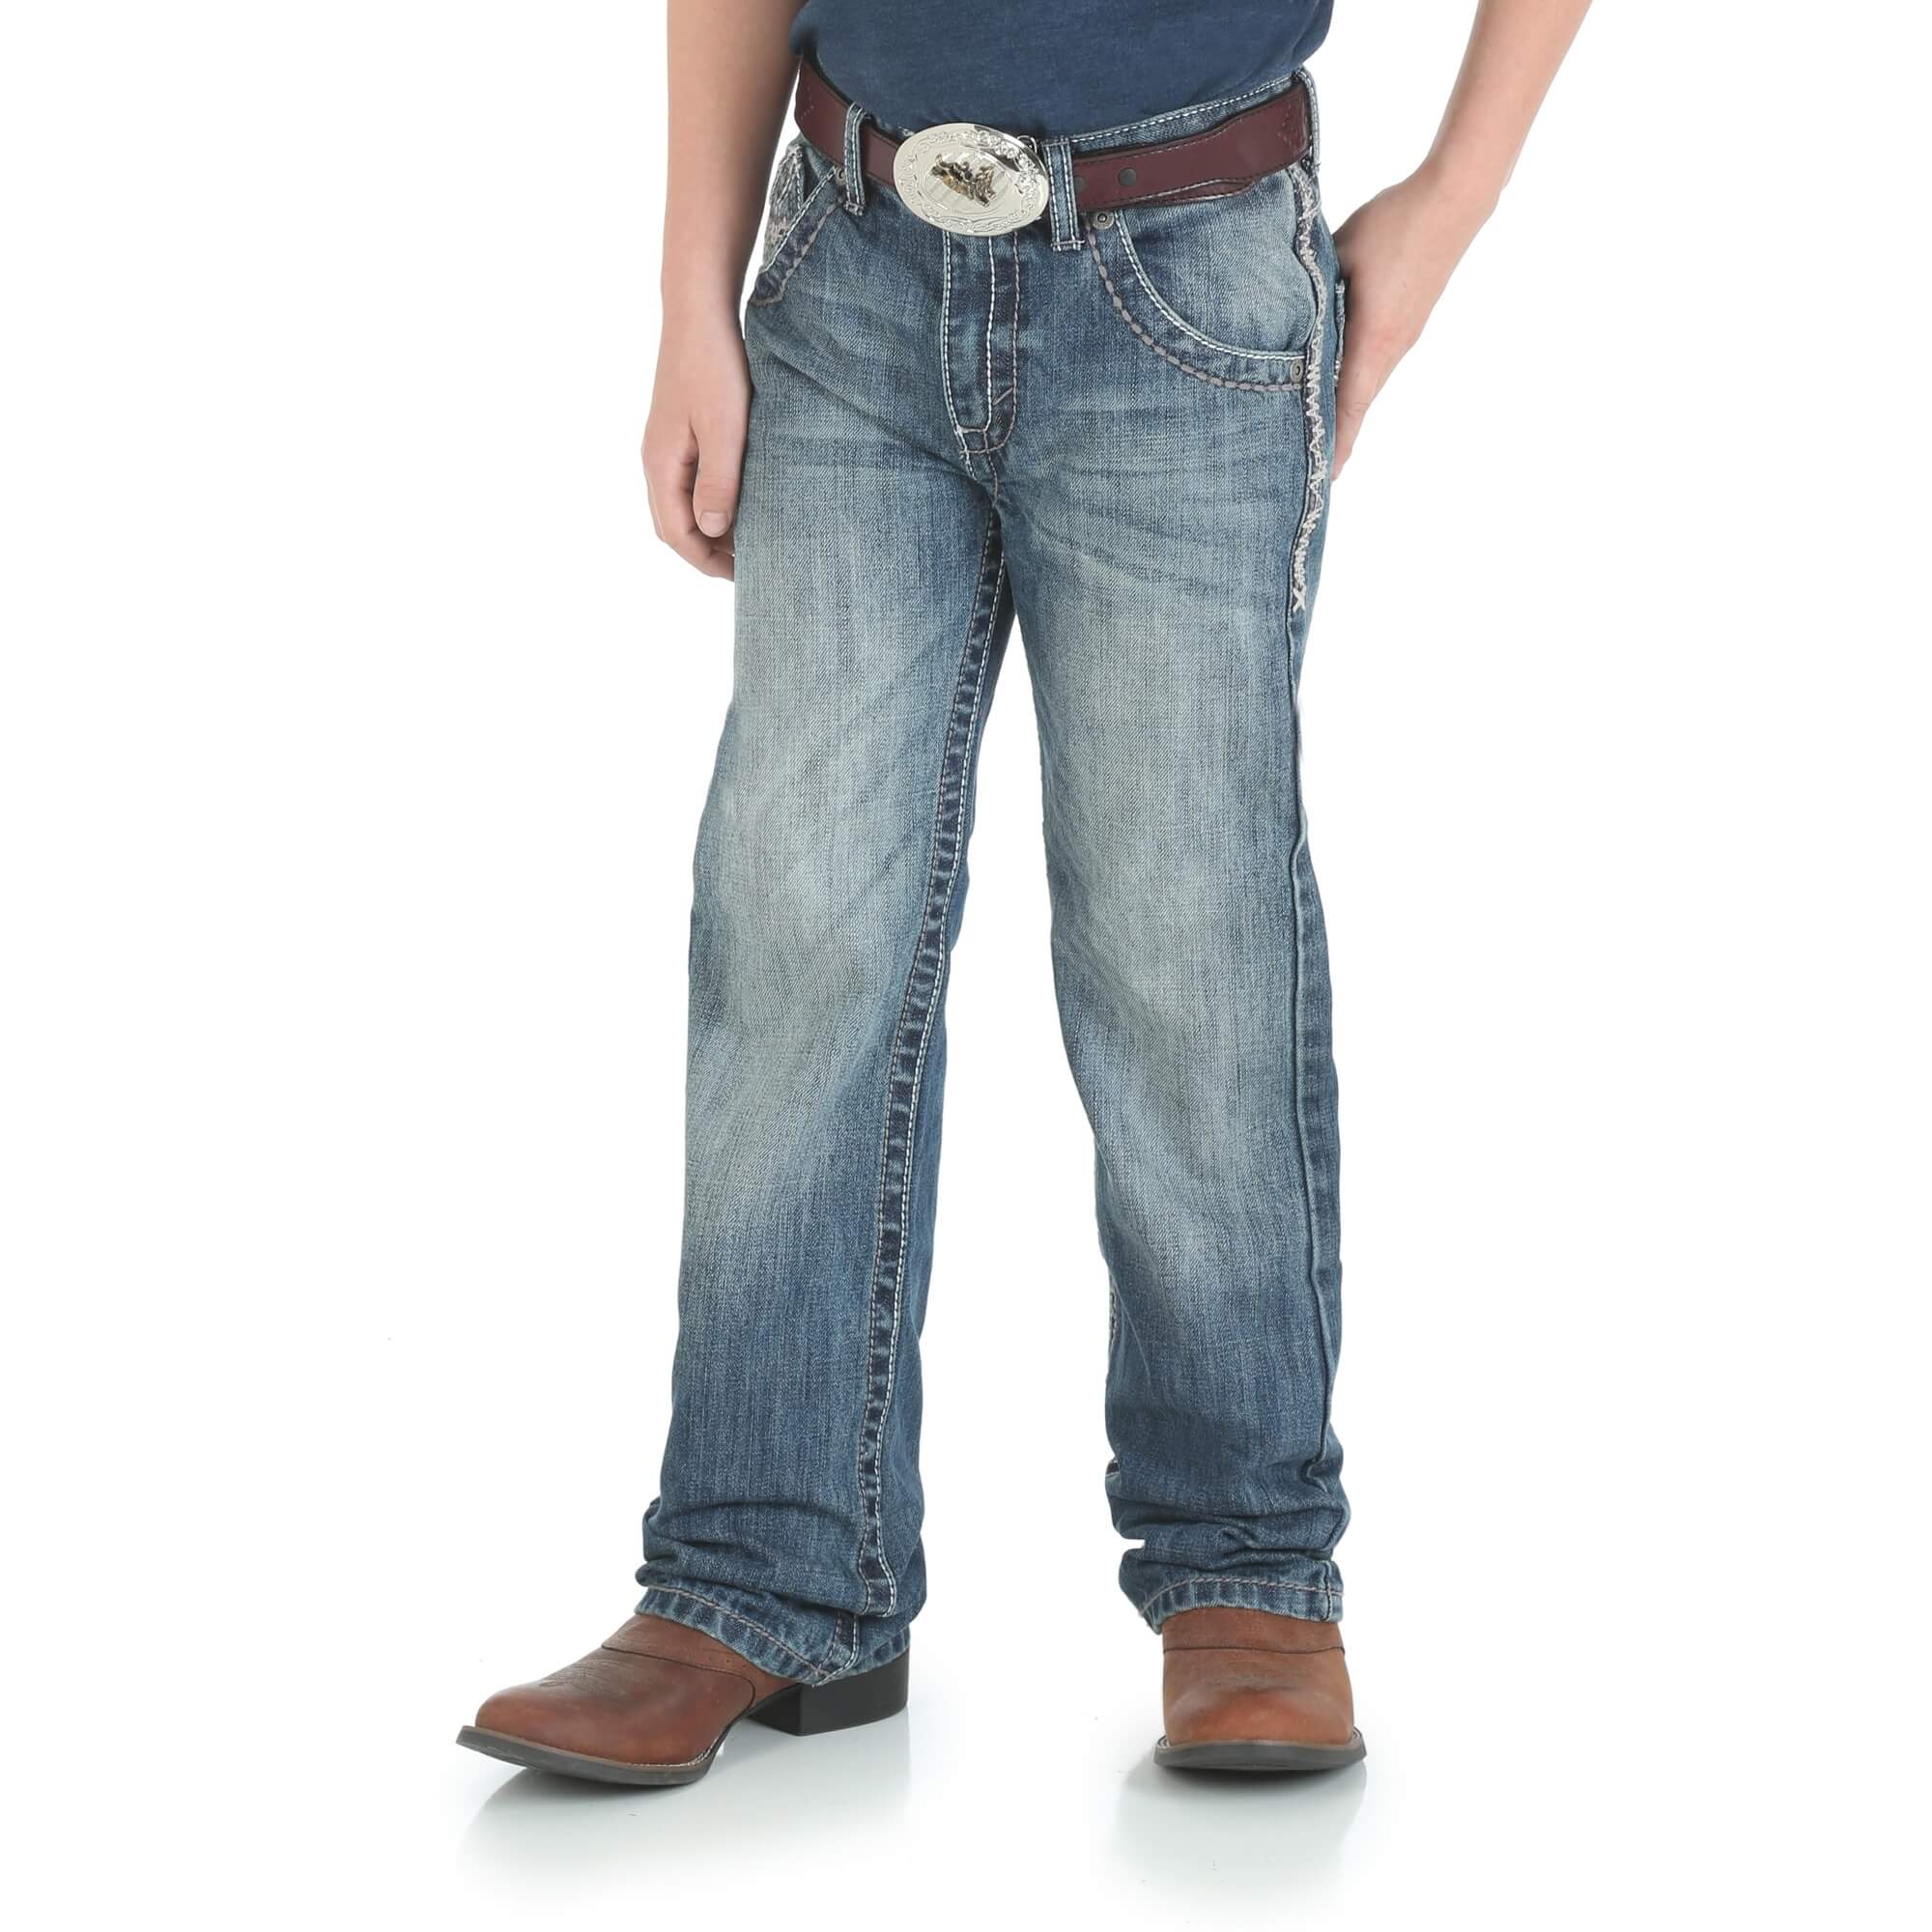 wrangler 20x bootcut jeans